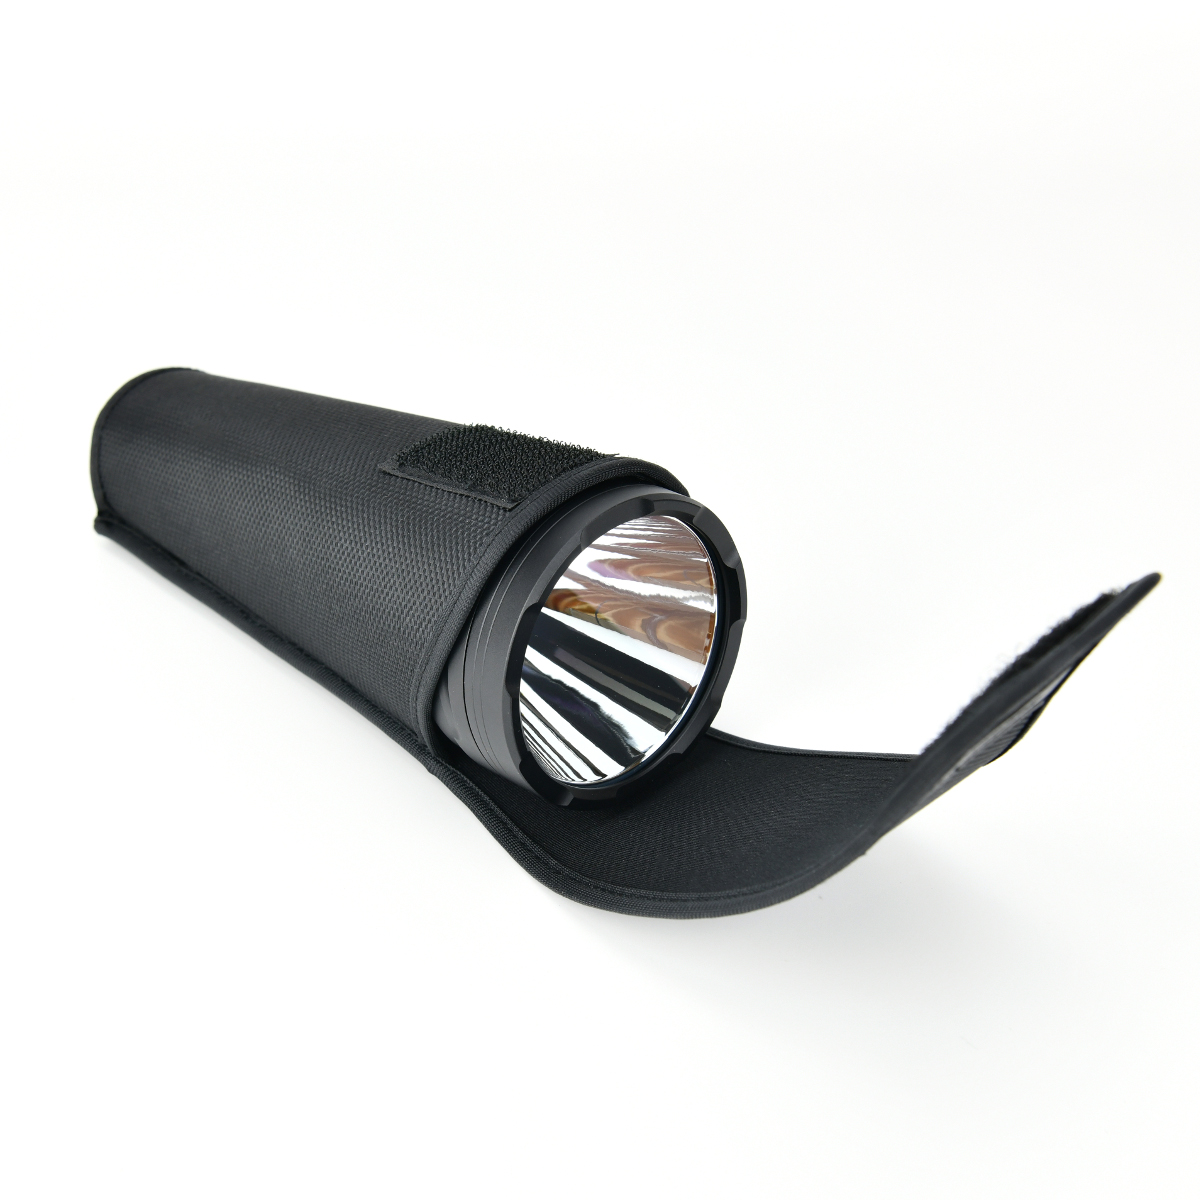 Astroluxreg-Flashlight-Holster-For-Astrolux-FT03-Flashlight-Protected-Bag-Waist-Bag-1934670-5